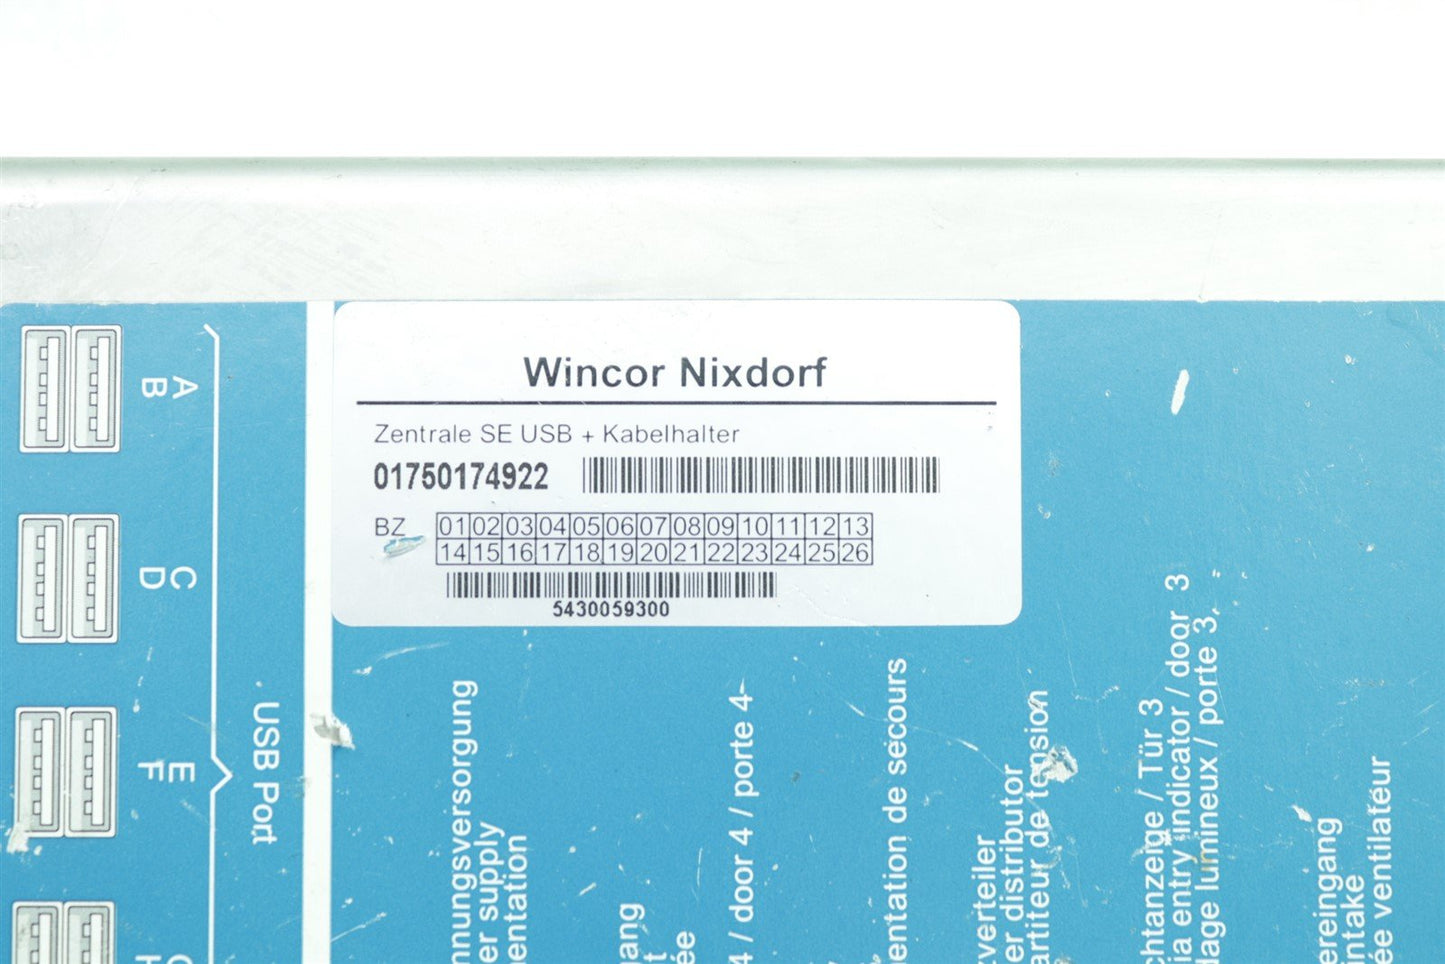 Wincor Nixdorf Zentrale SE USB Kabelhalter 01750174922